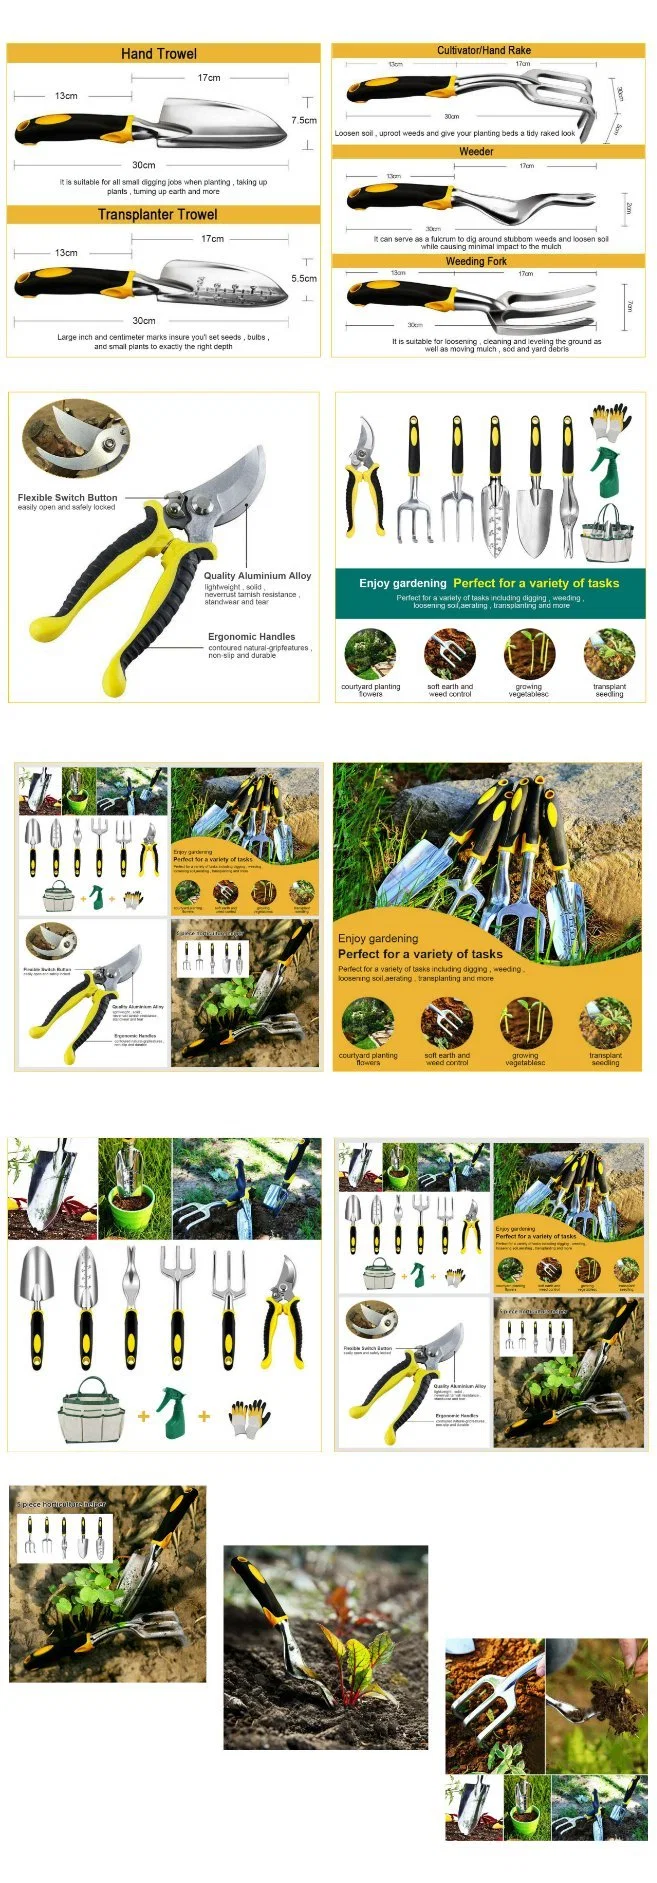 Specialty 8 Piece Lady Garden Tool Set, Flower Design Garden Tool Set, Gardening Tool with Bag